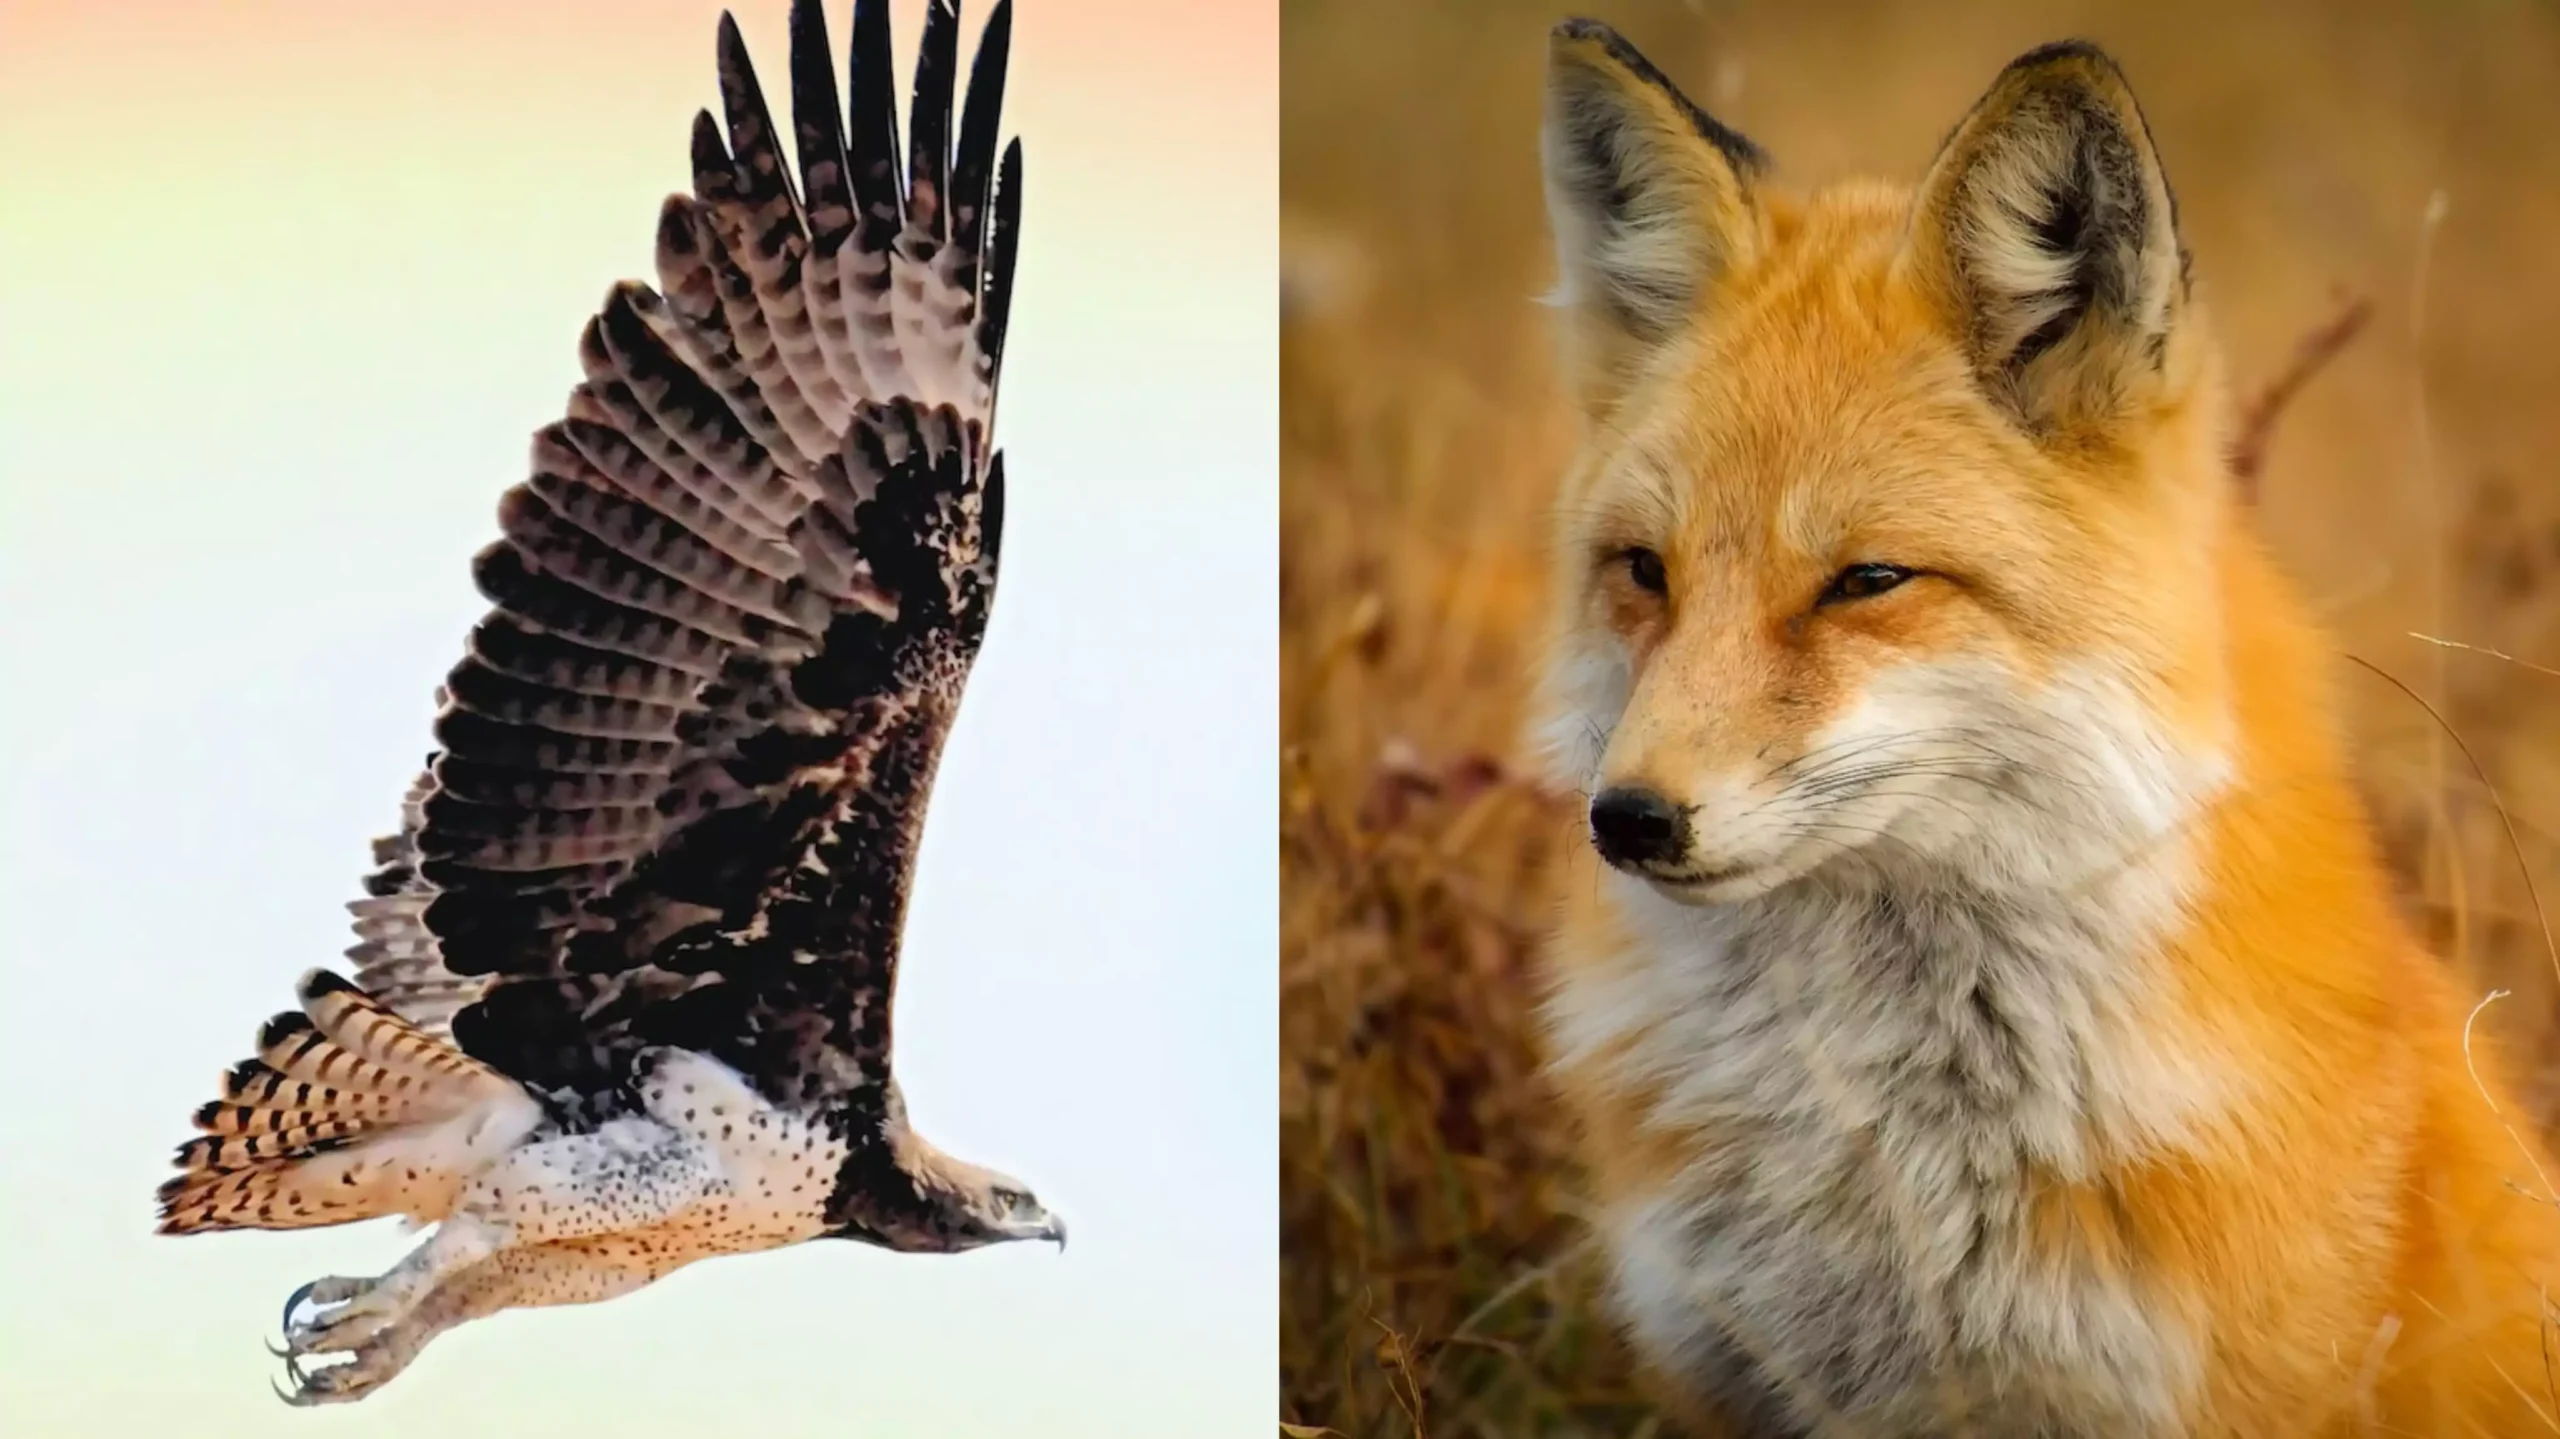 Do Hawks Eat Foxes